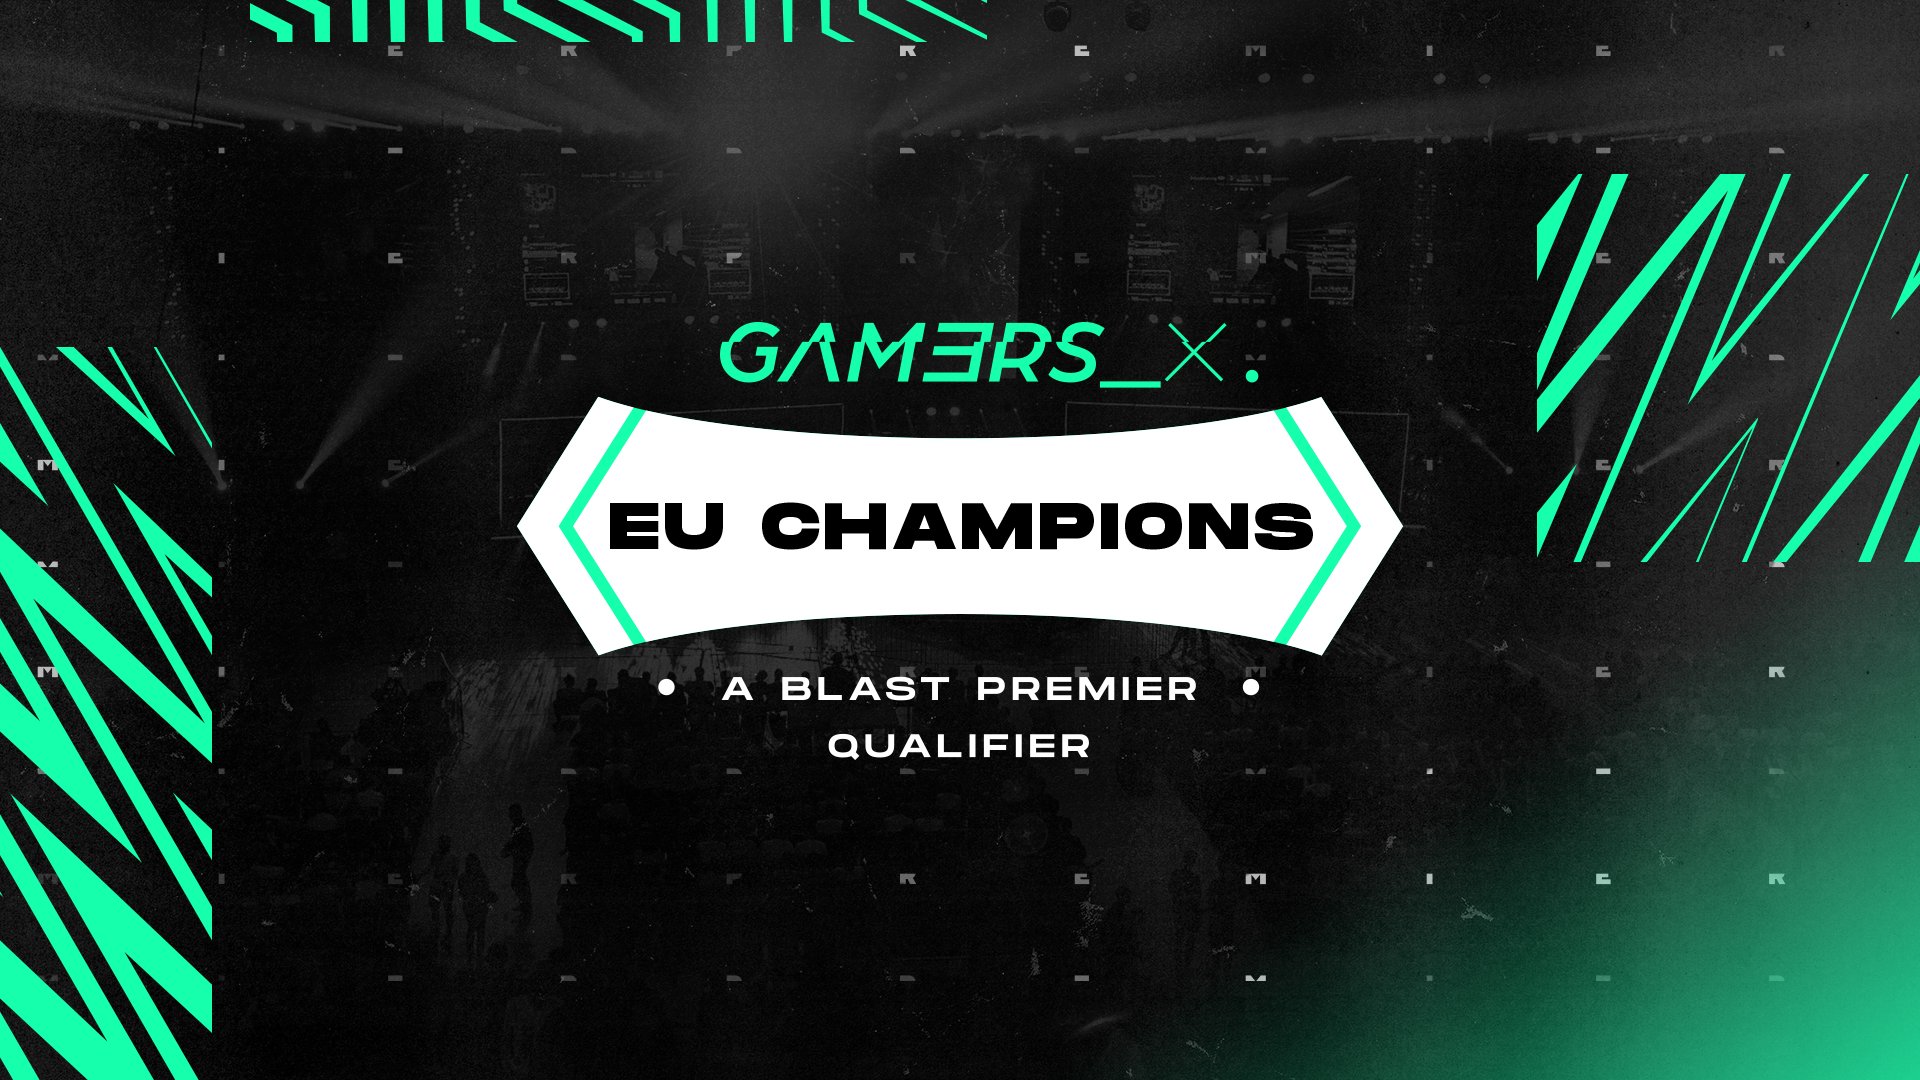 GAM3RS_X EU Champions – A BLAST Premier Qualifier